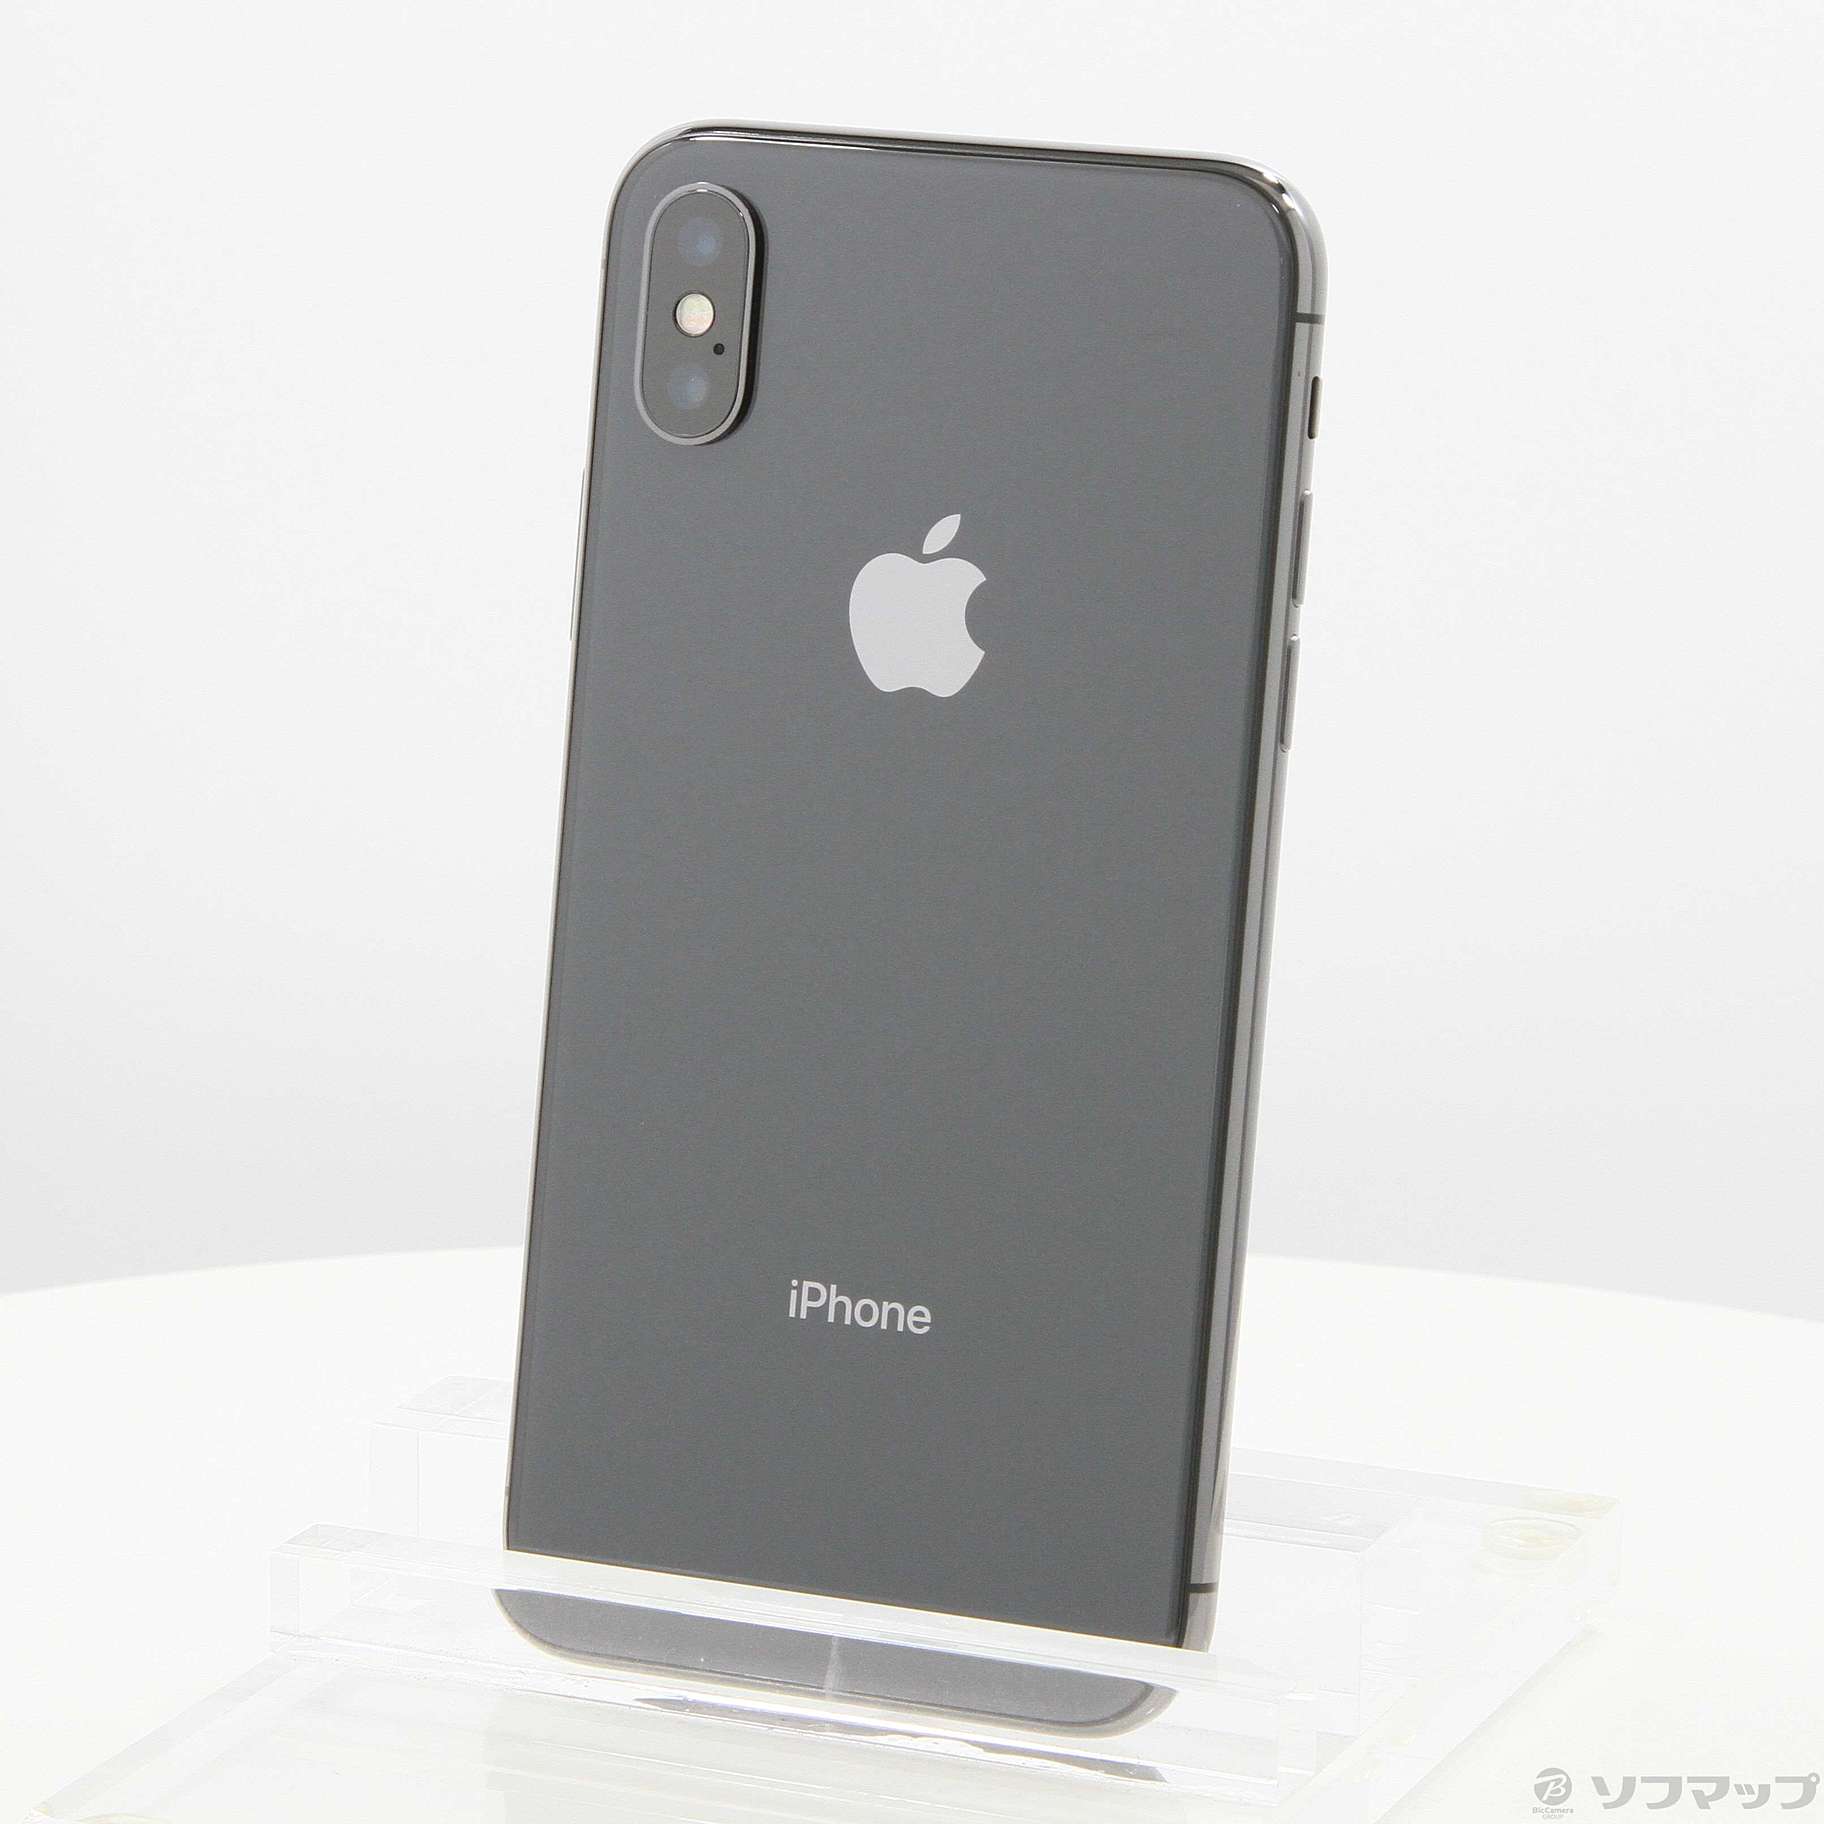 iPhone X Space Gray 64 GB Softbank - 携帯電話